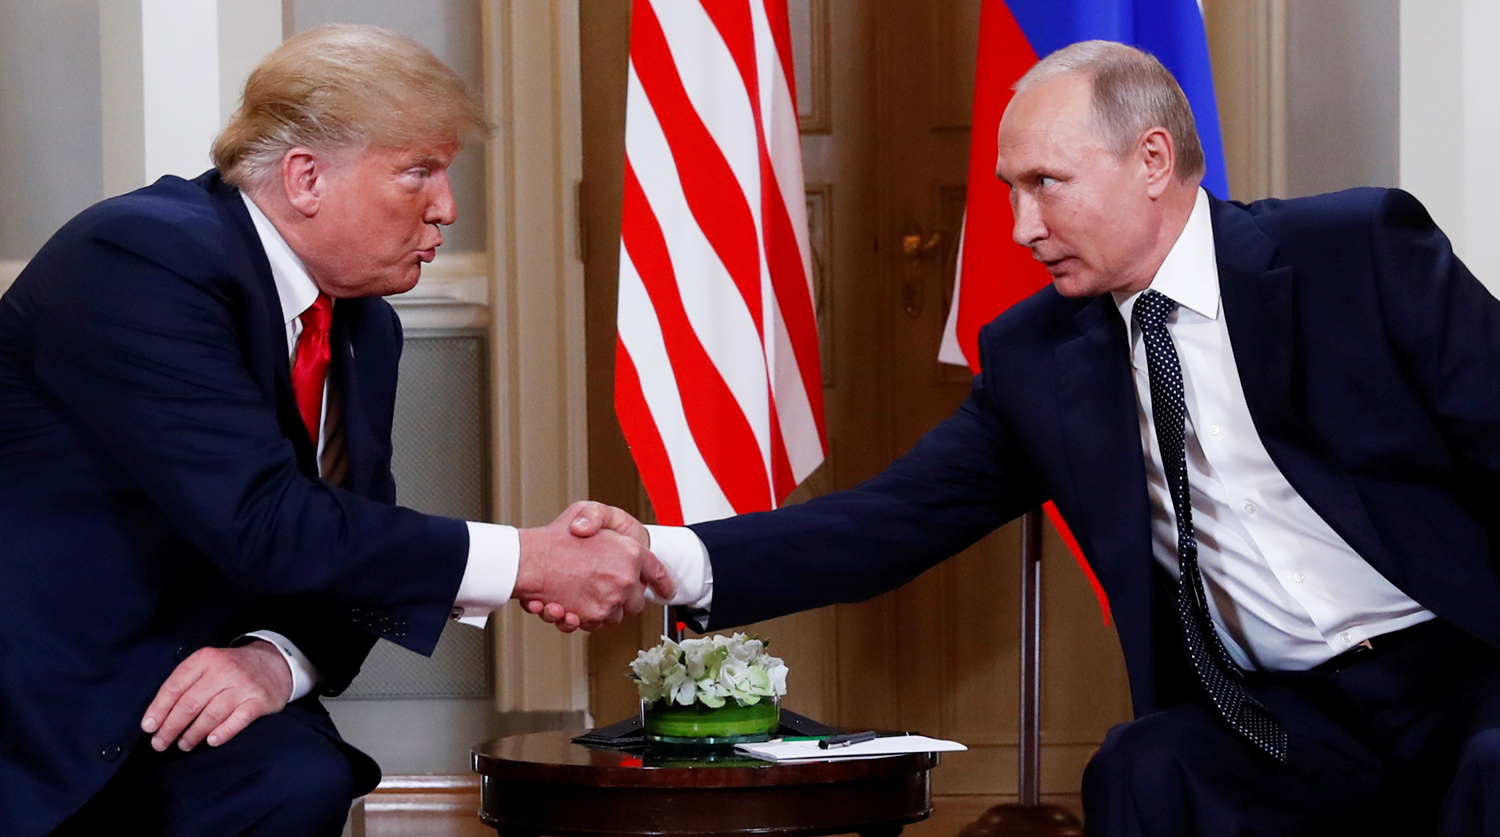 Мюрид о договоренности Трампа и Путина: "Россия пострадала"